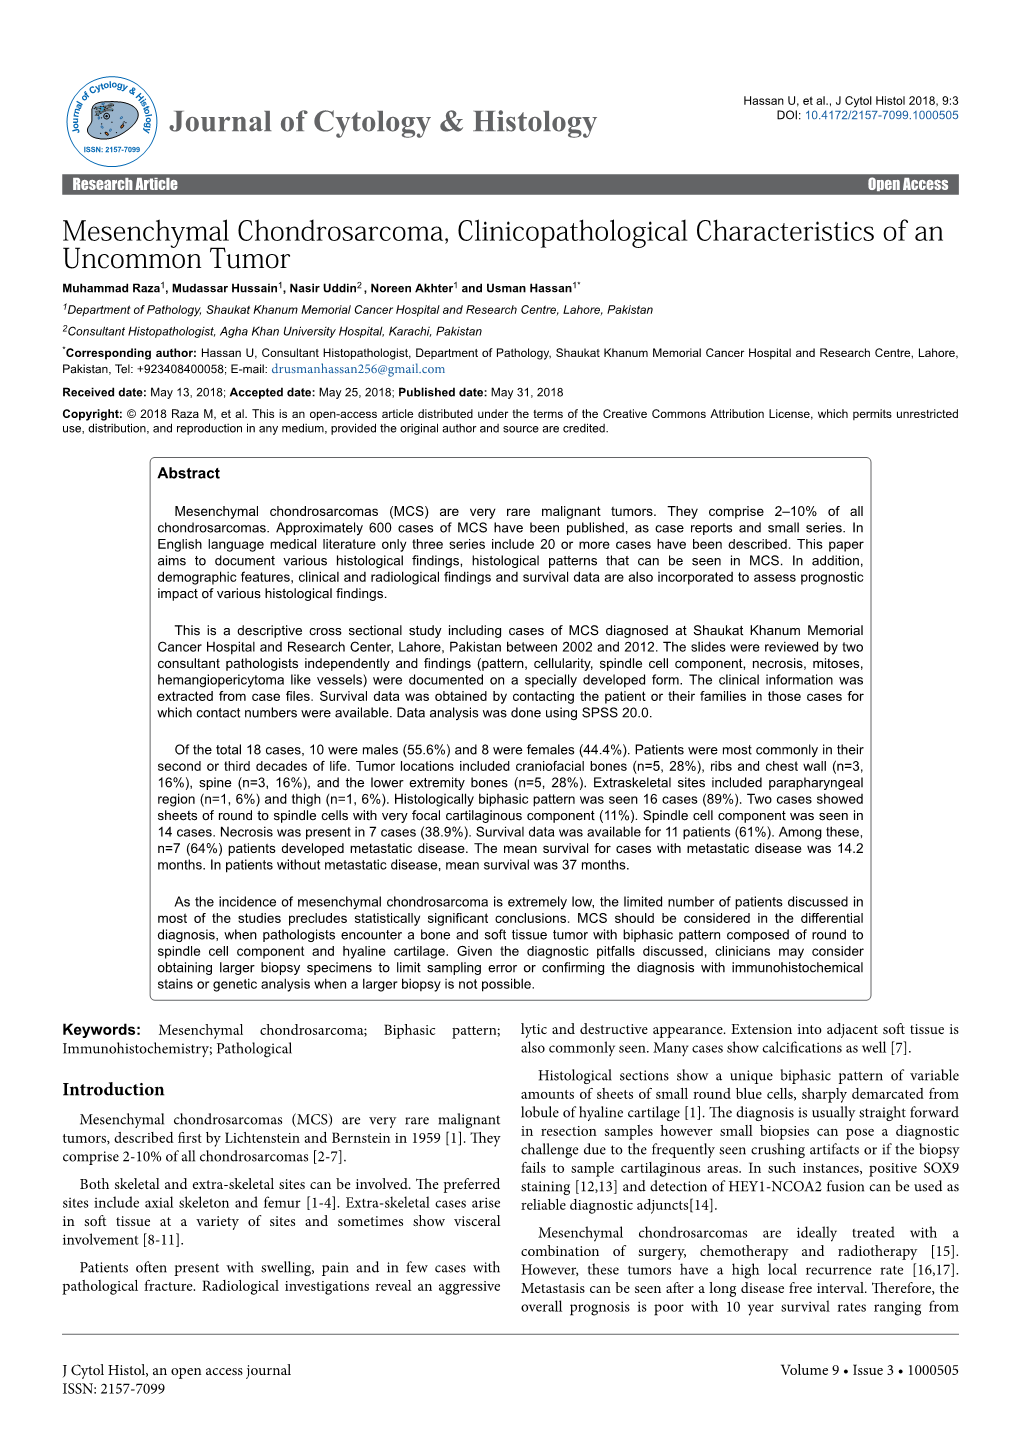 Mesenchymal Chondrosarcoma, Clinicopathological Characteristics